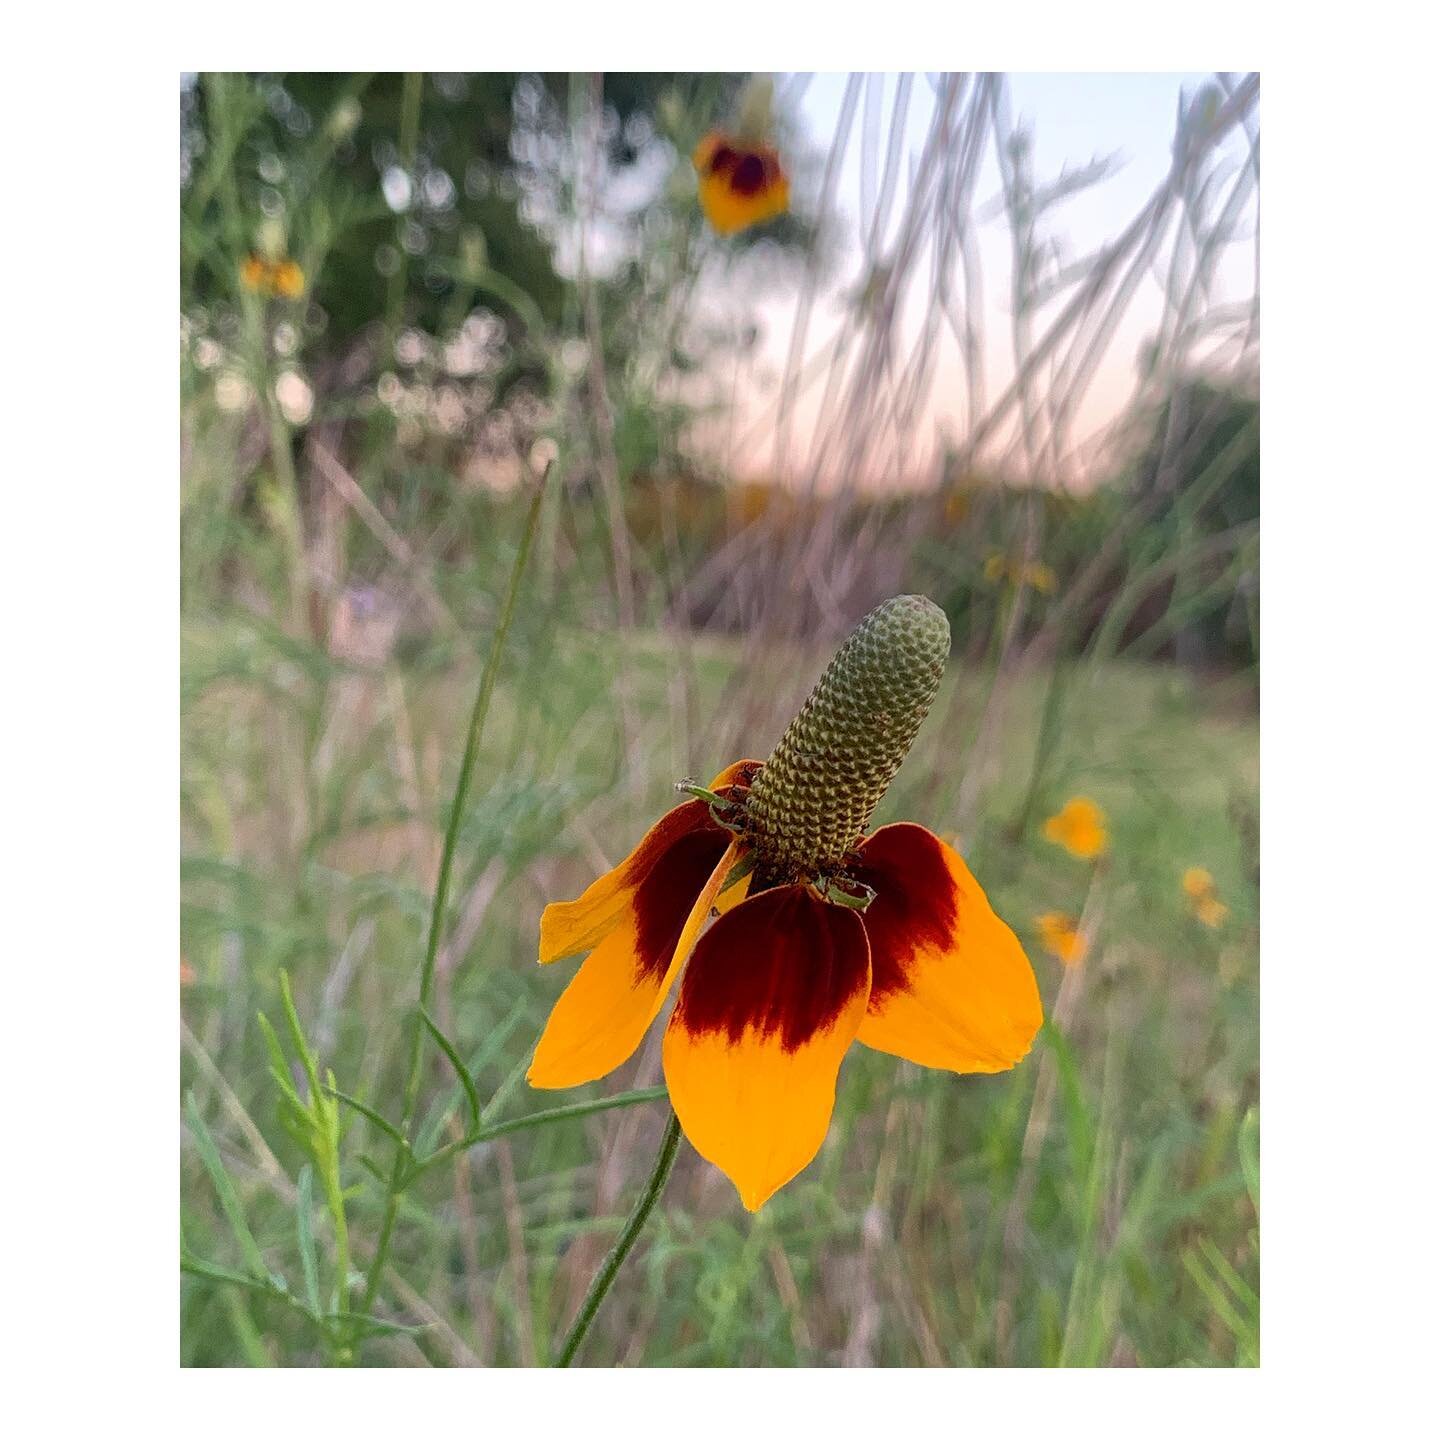 (more) TX wildflowers 🌼
Spring 2021